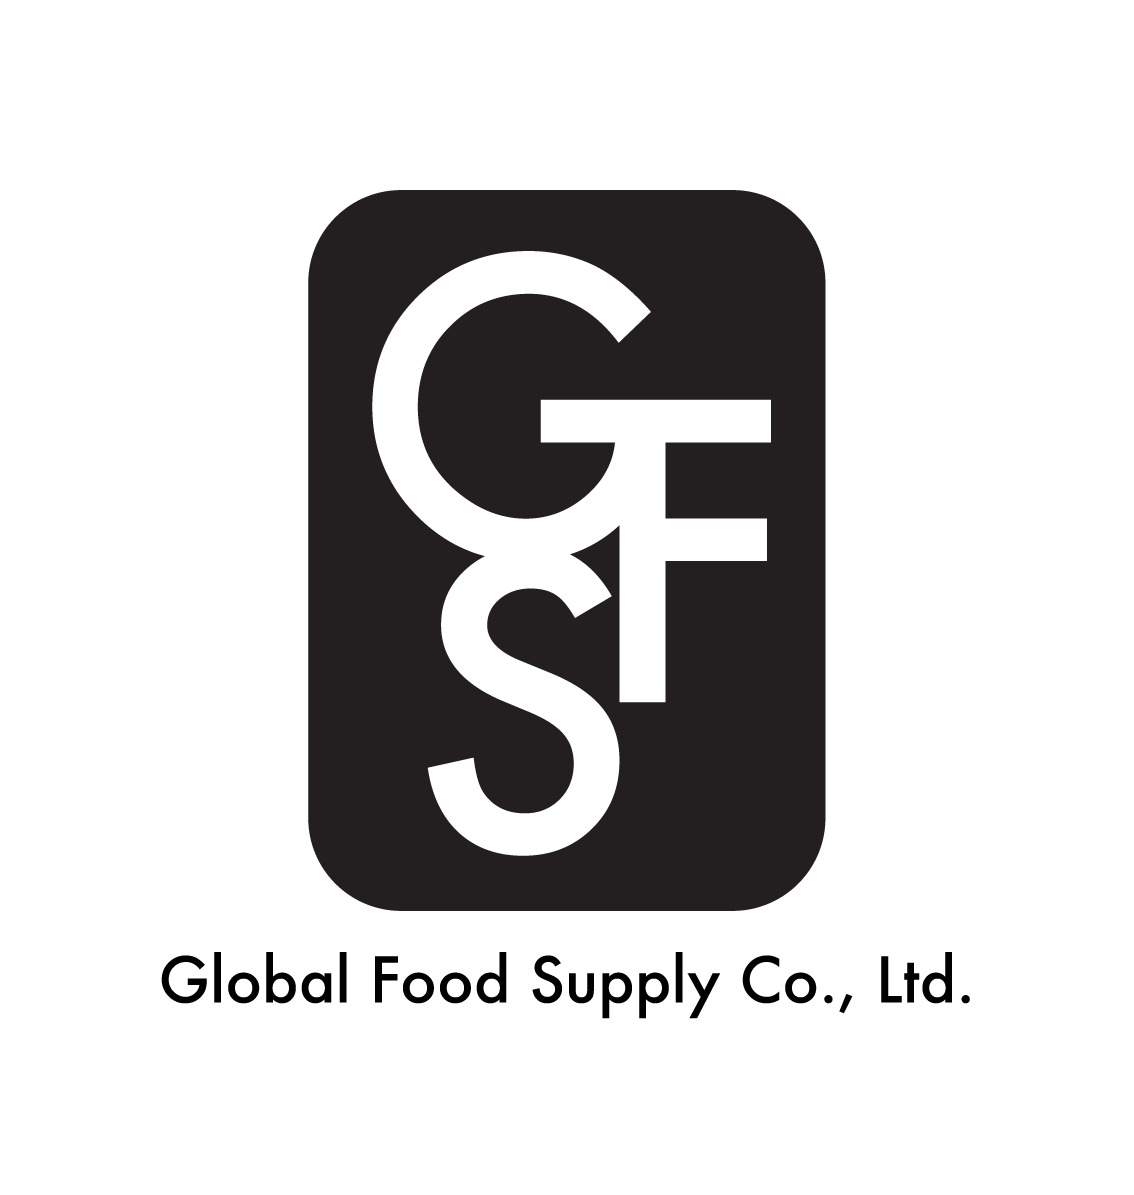 Global Food Supply Co., Ltd.